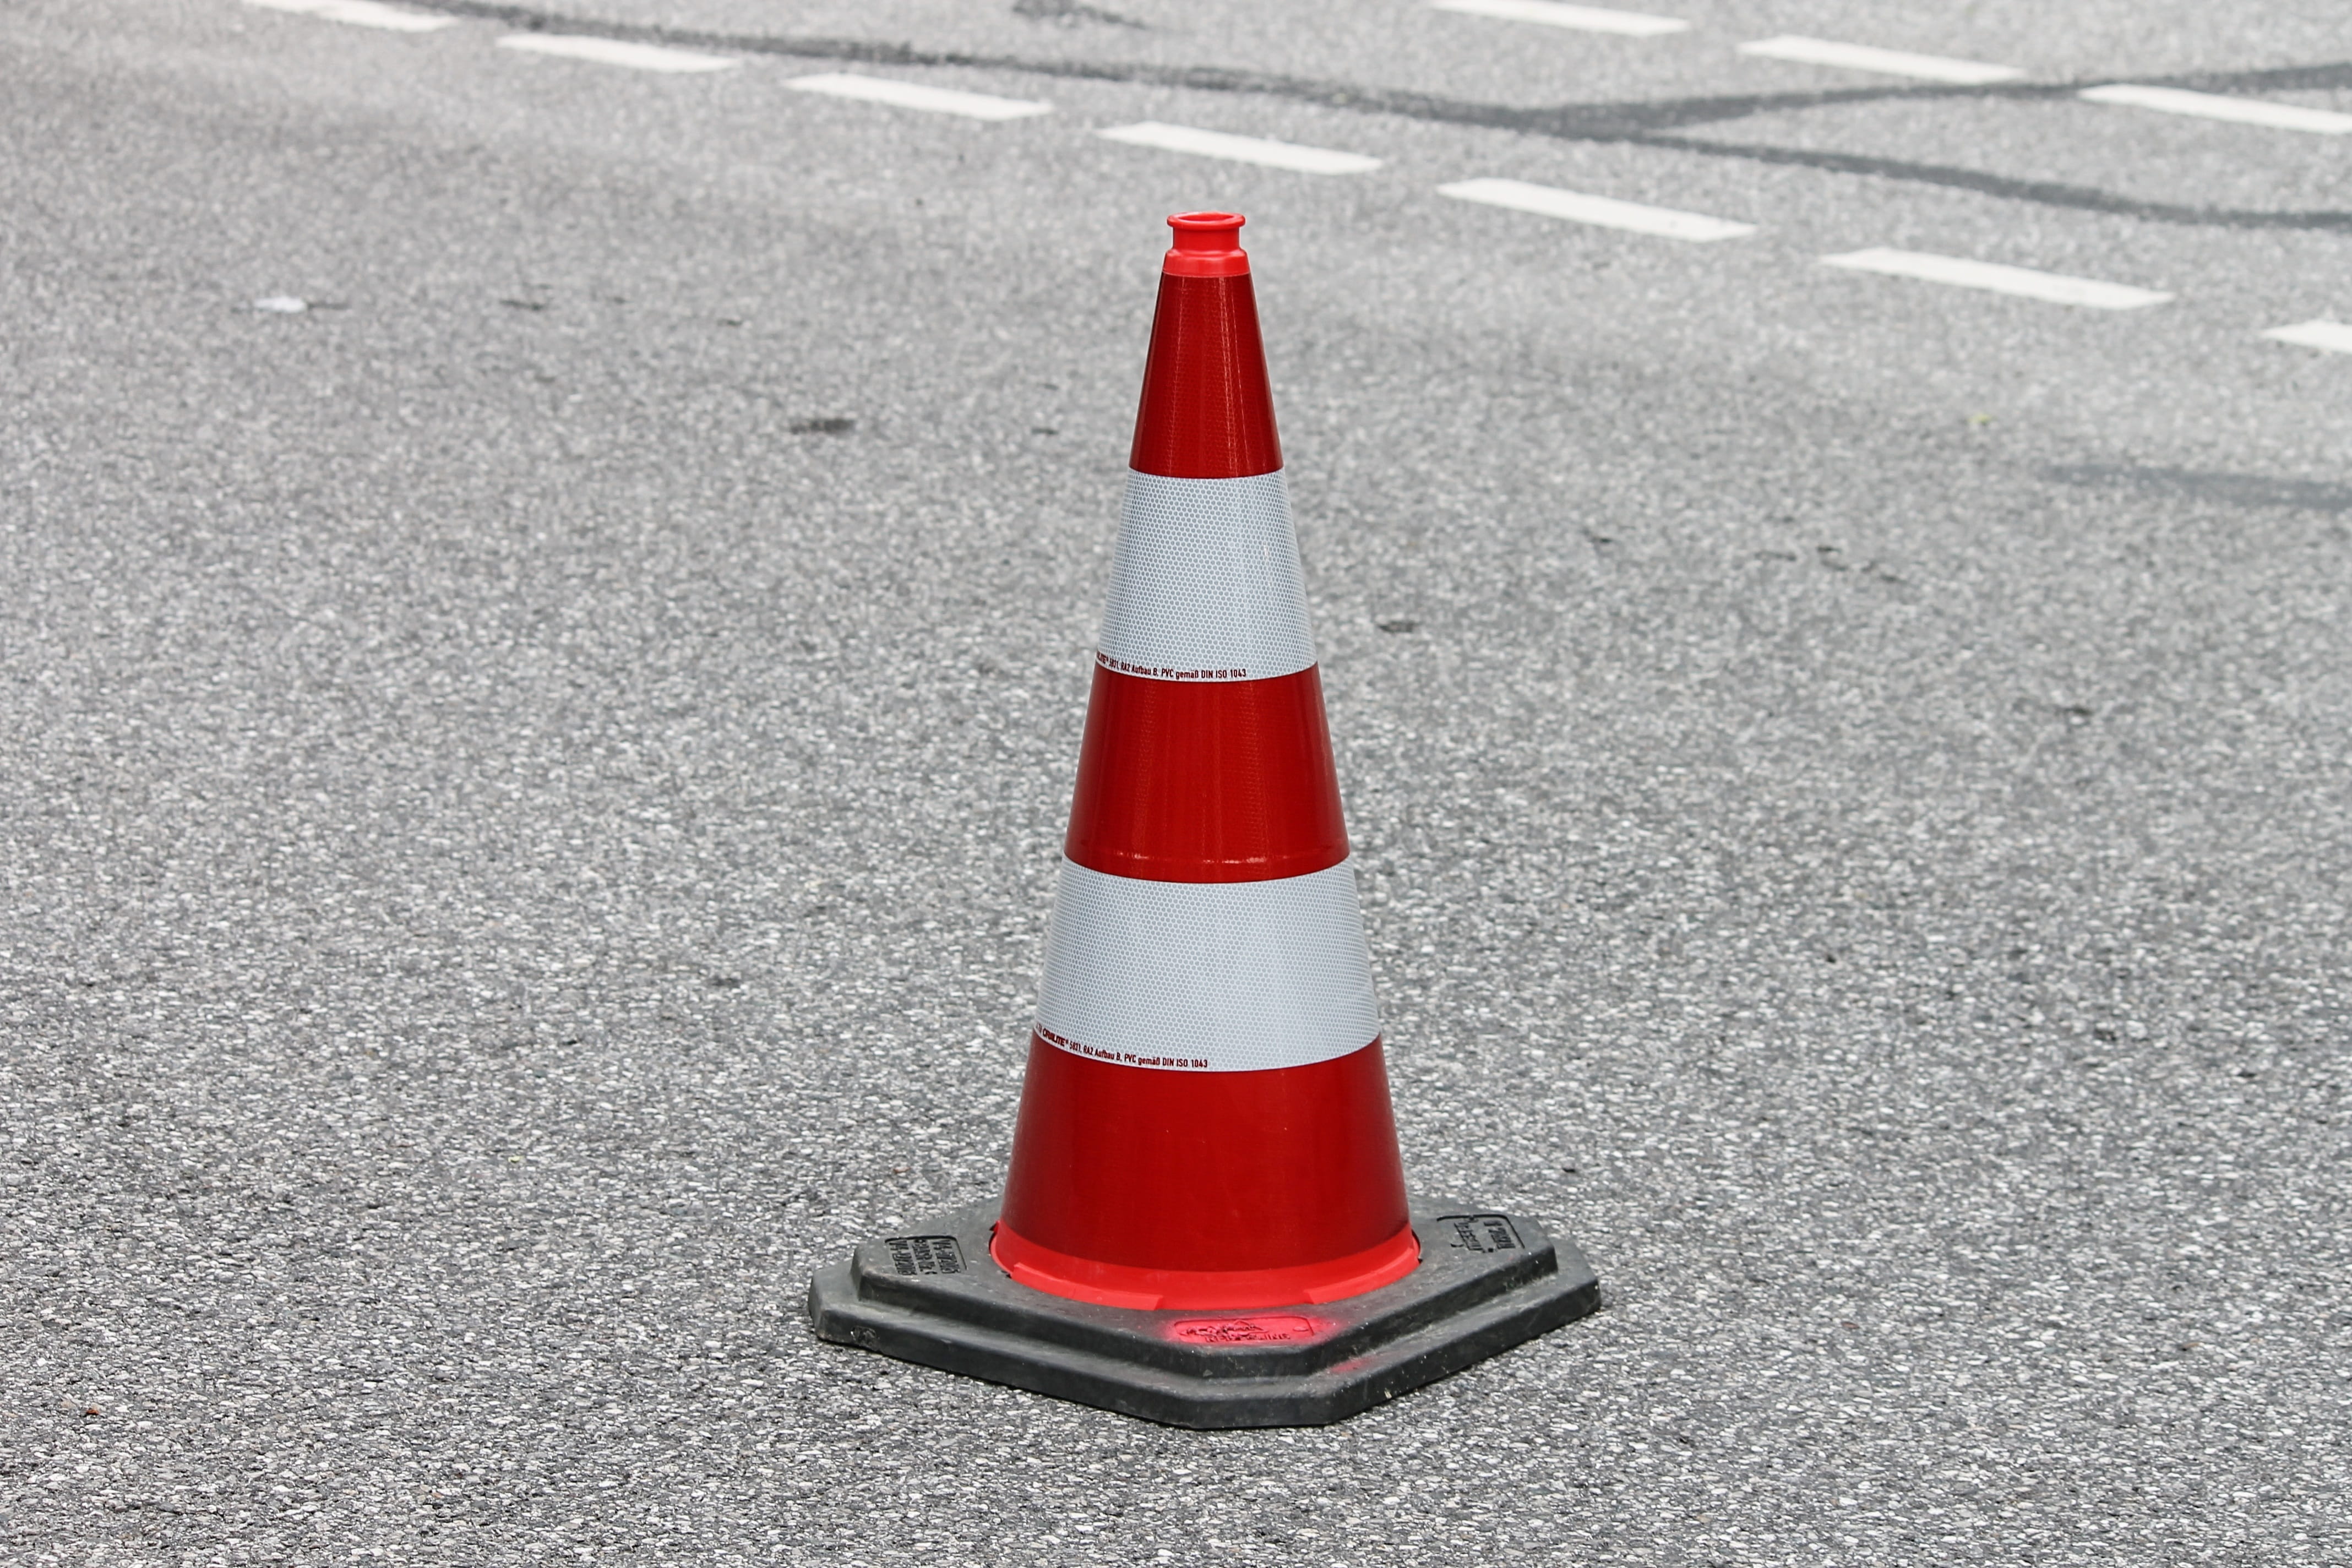 pylon, traffic cone, barrier, road sign, lock, hat, transport facility